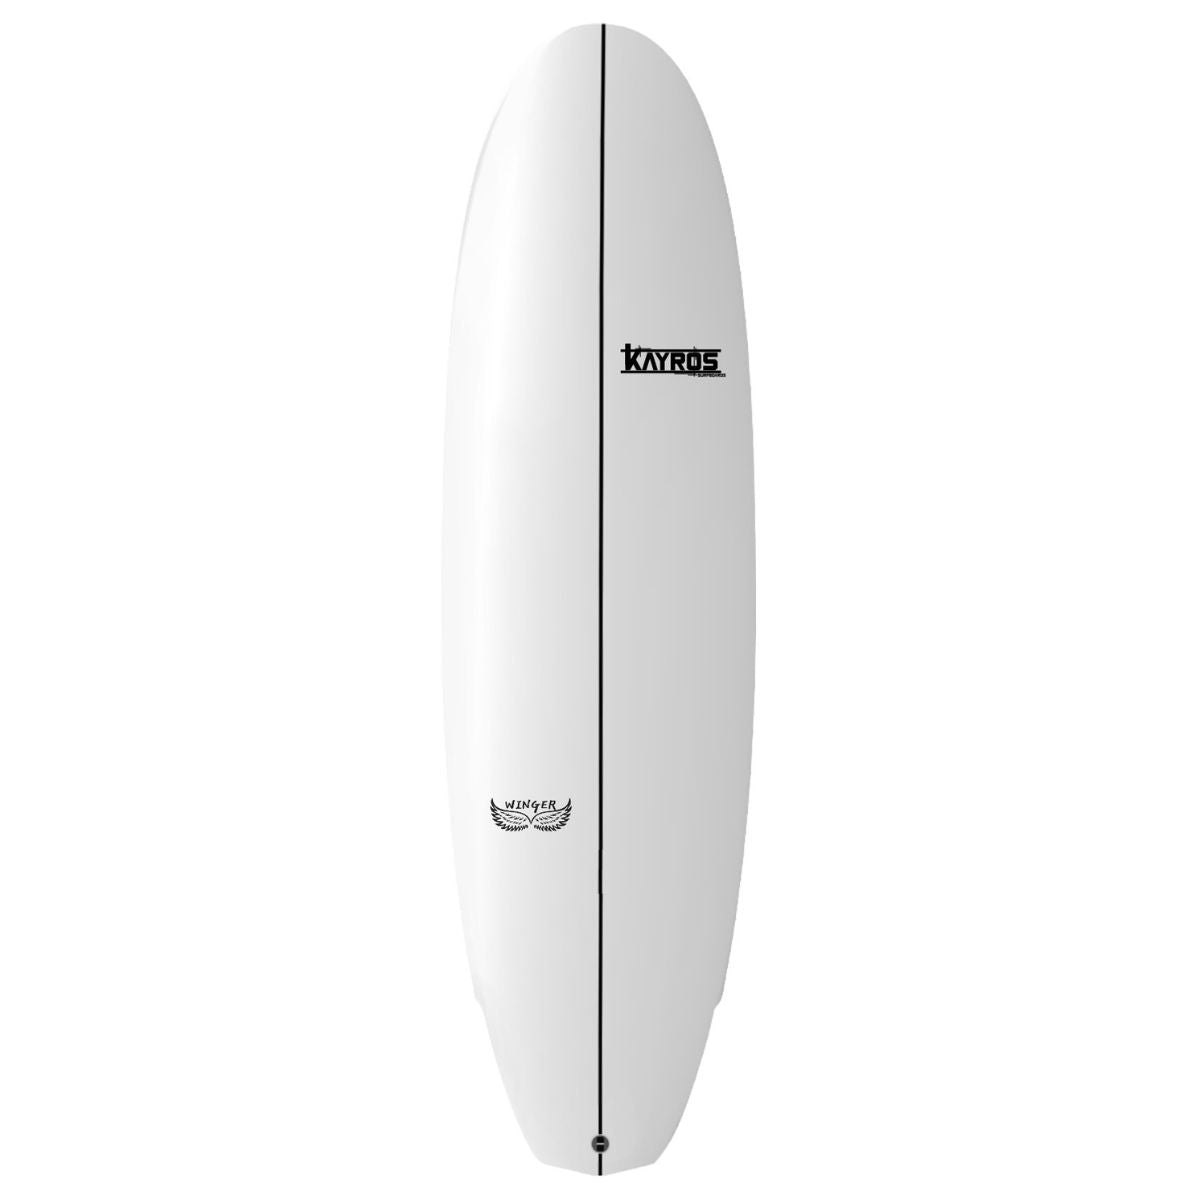 Winger | Kayros Surfboards